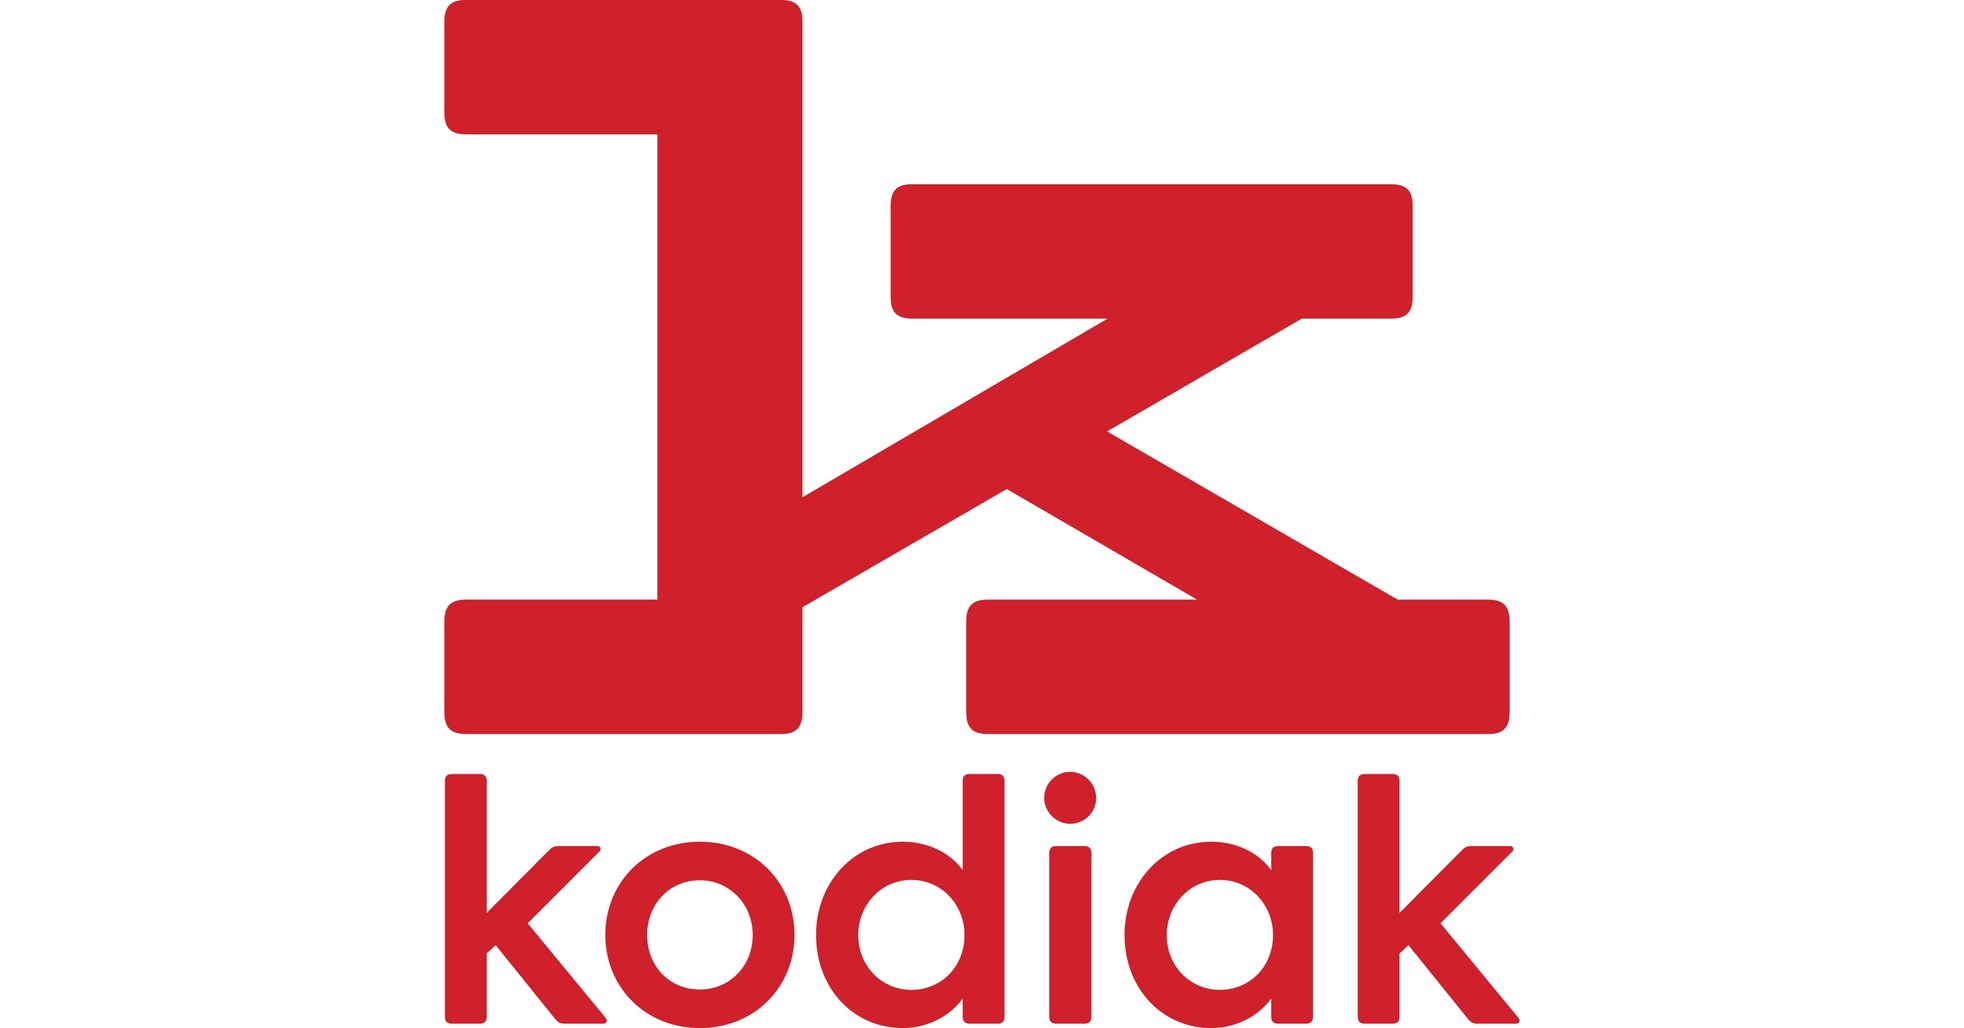 Kodiak Robotics Receives $30M in Growth Financing